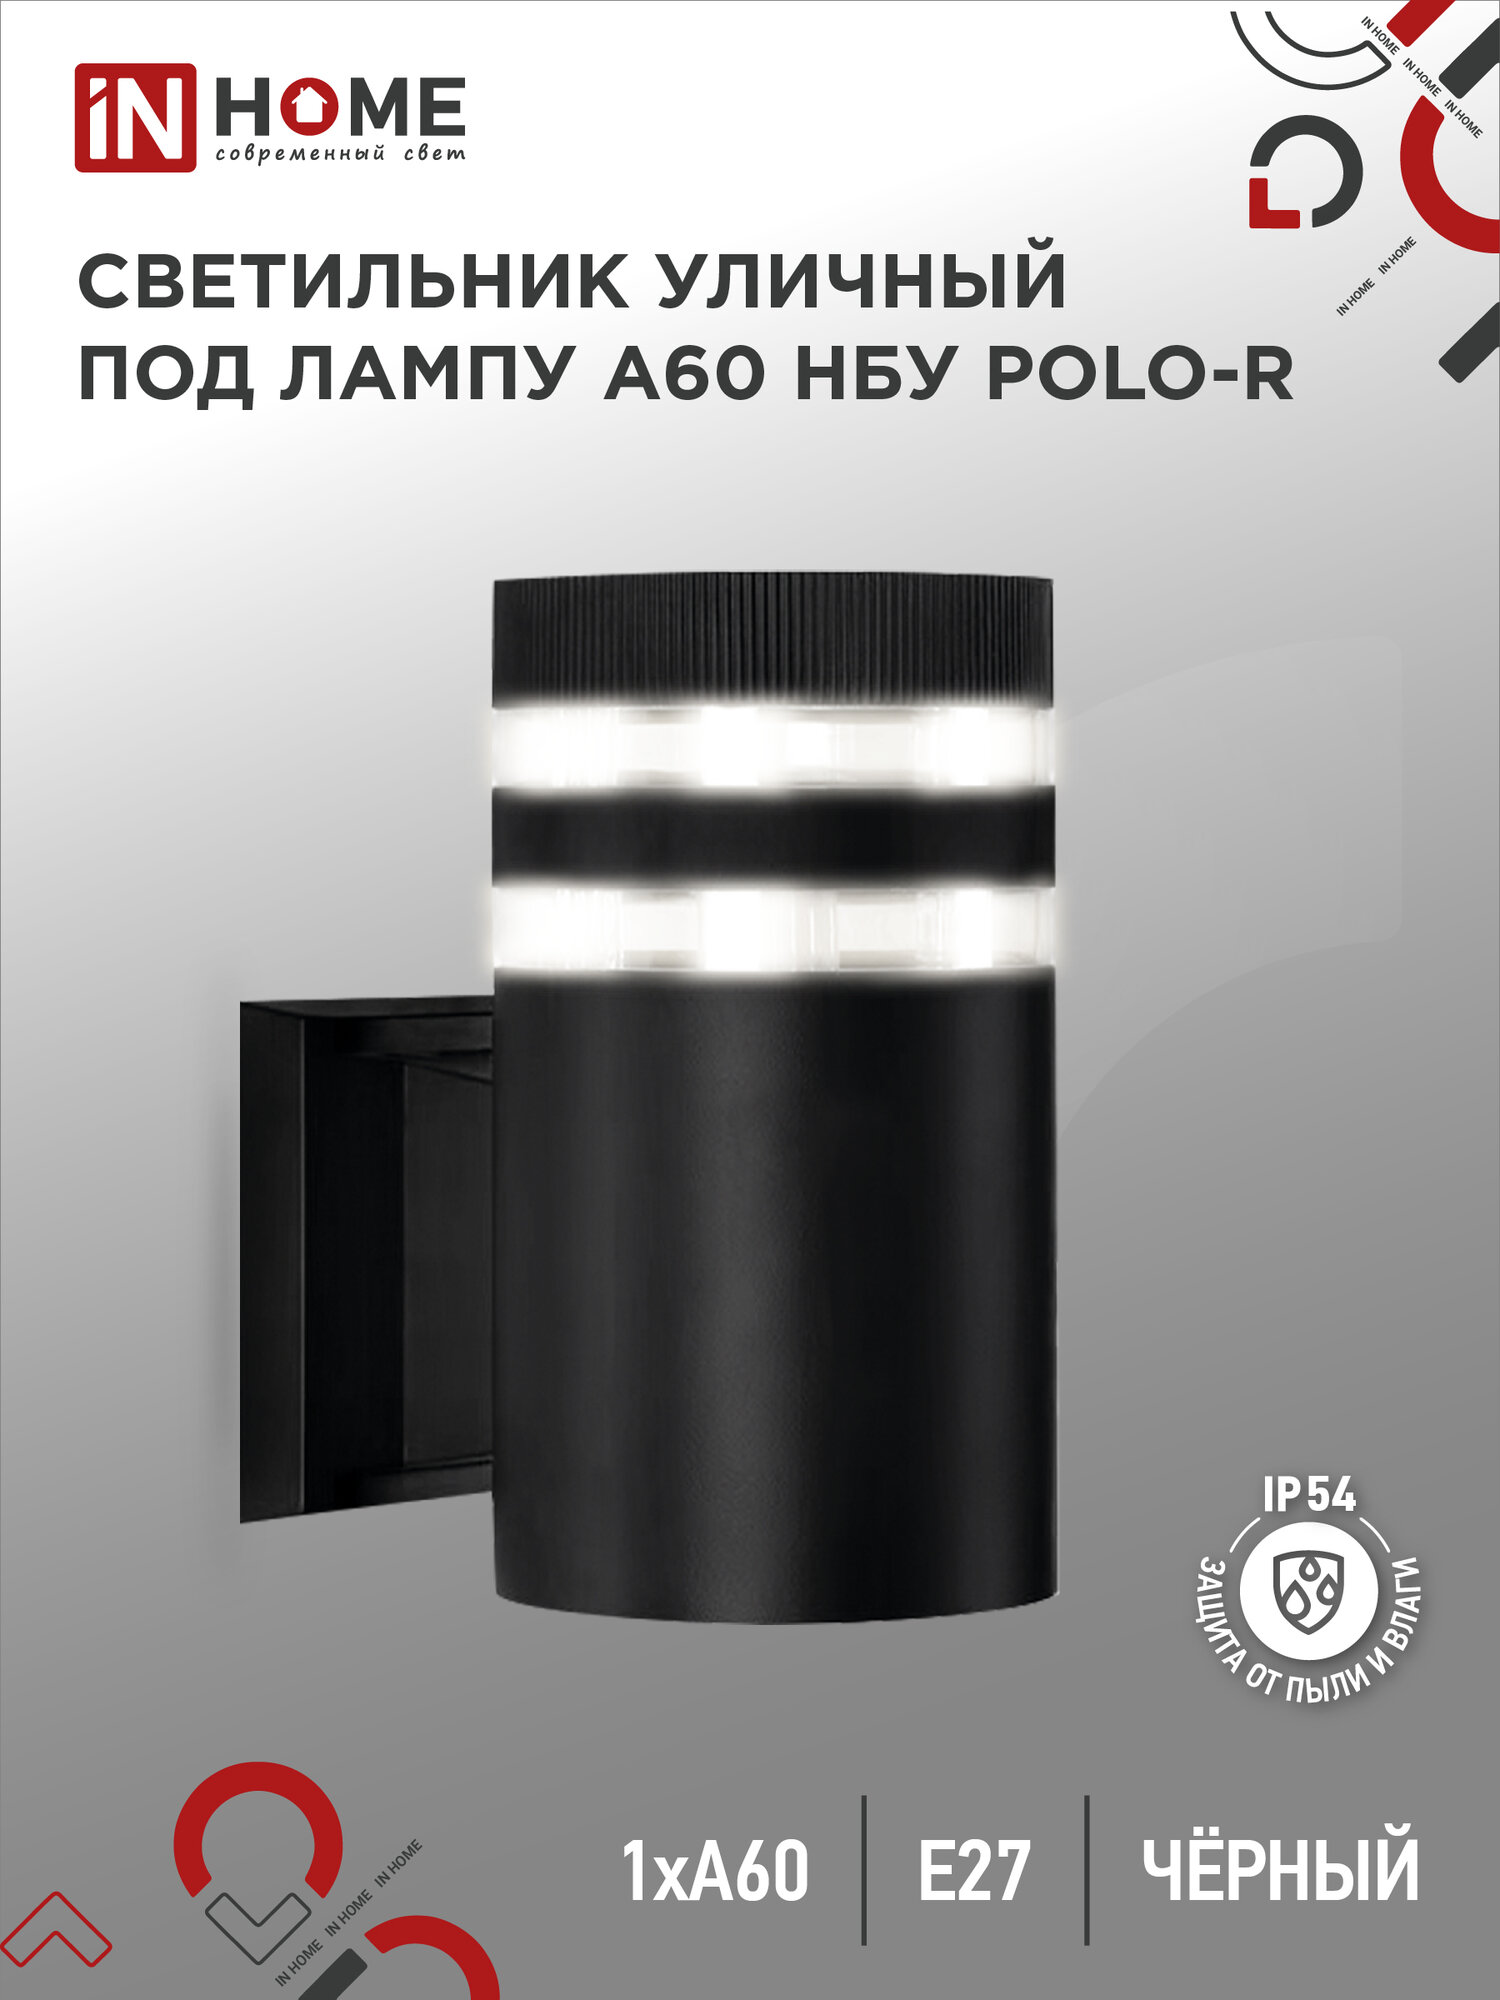 Светильник уличный односторонний НБУ POLO-R-1xA60-BL-алюминиевый под 1xA60 E27 черный IP65 IN HOME